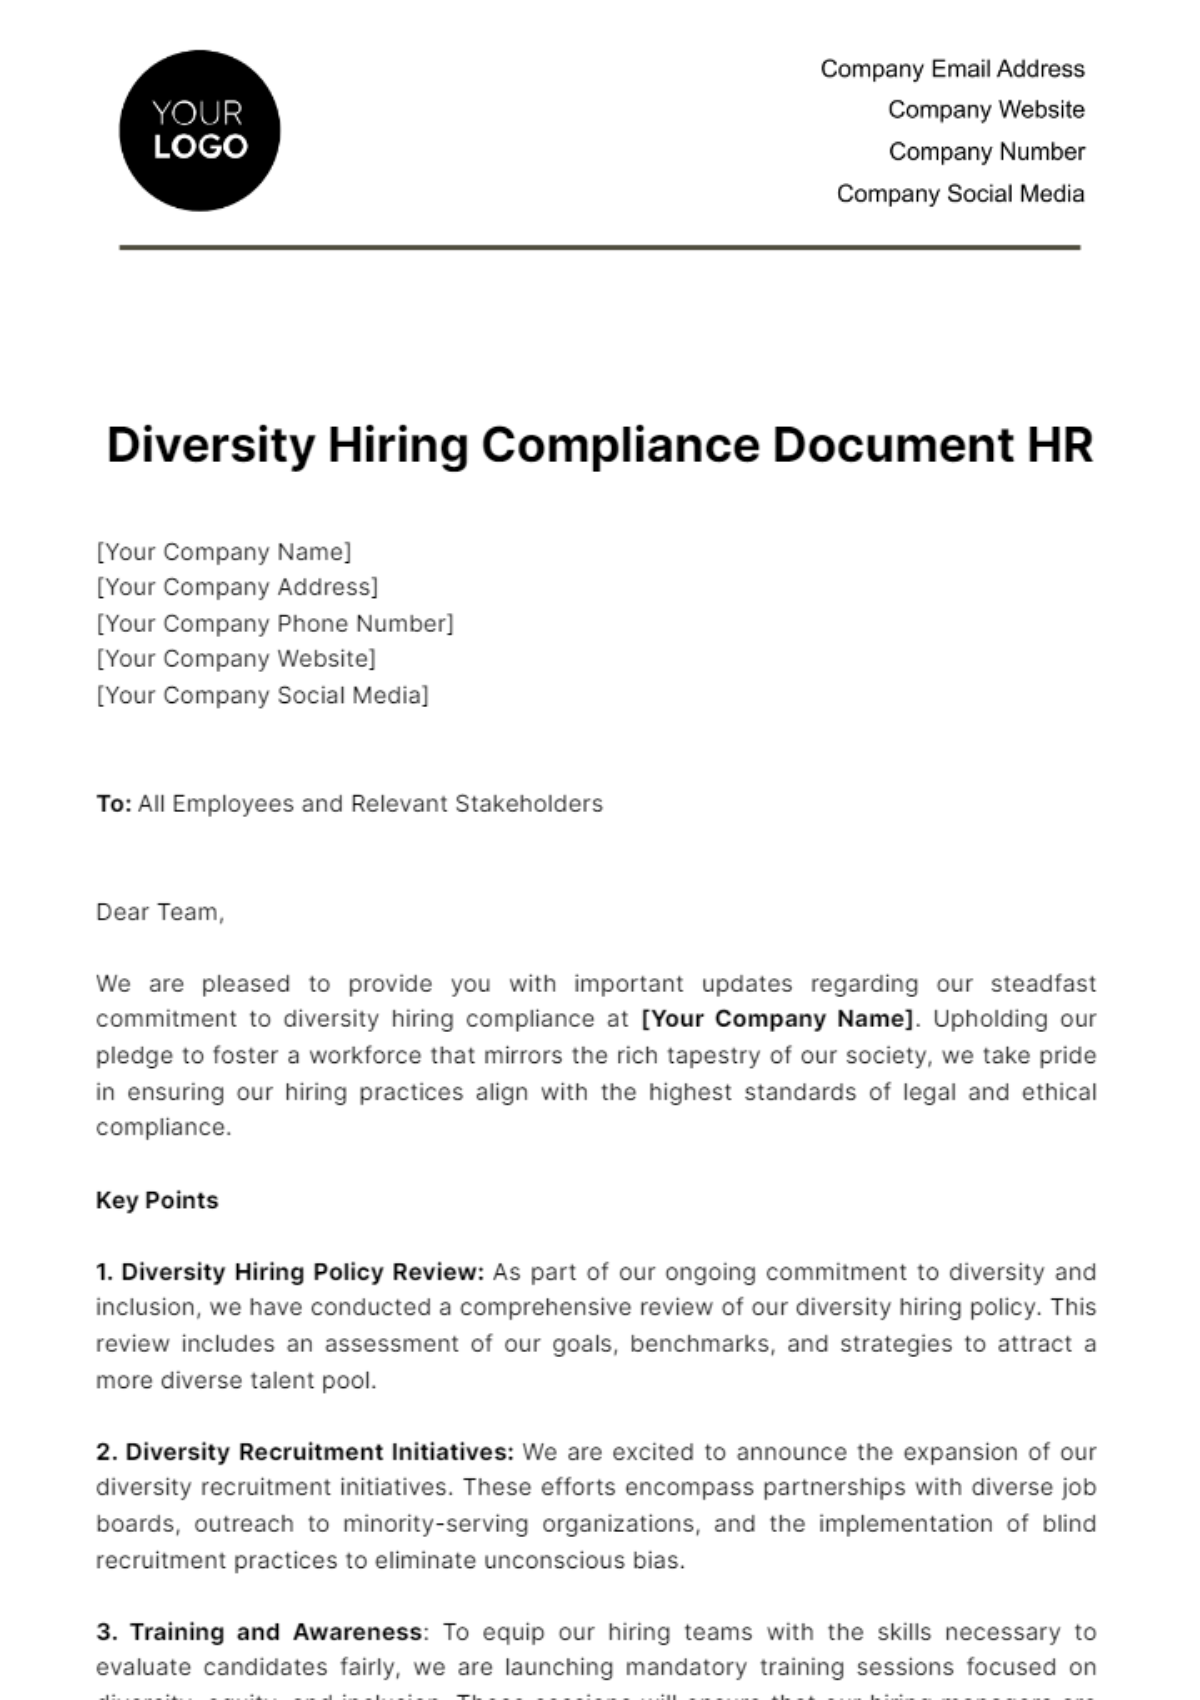 Free Diversity Hiring Compliance Document HR Template